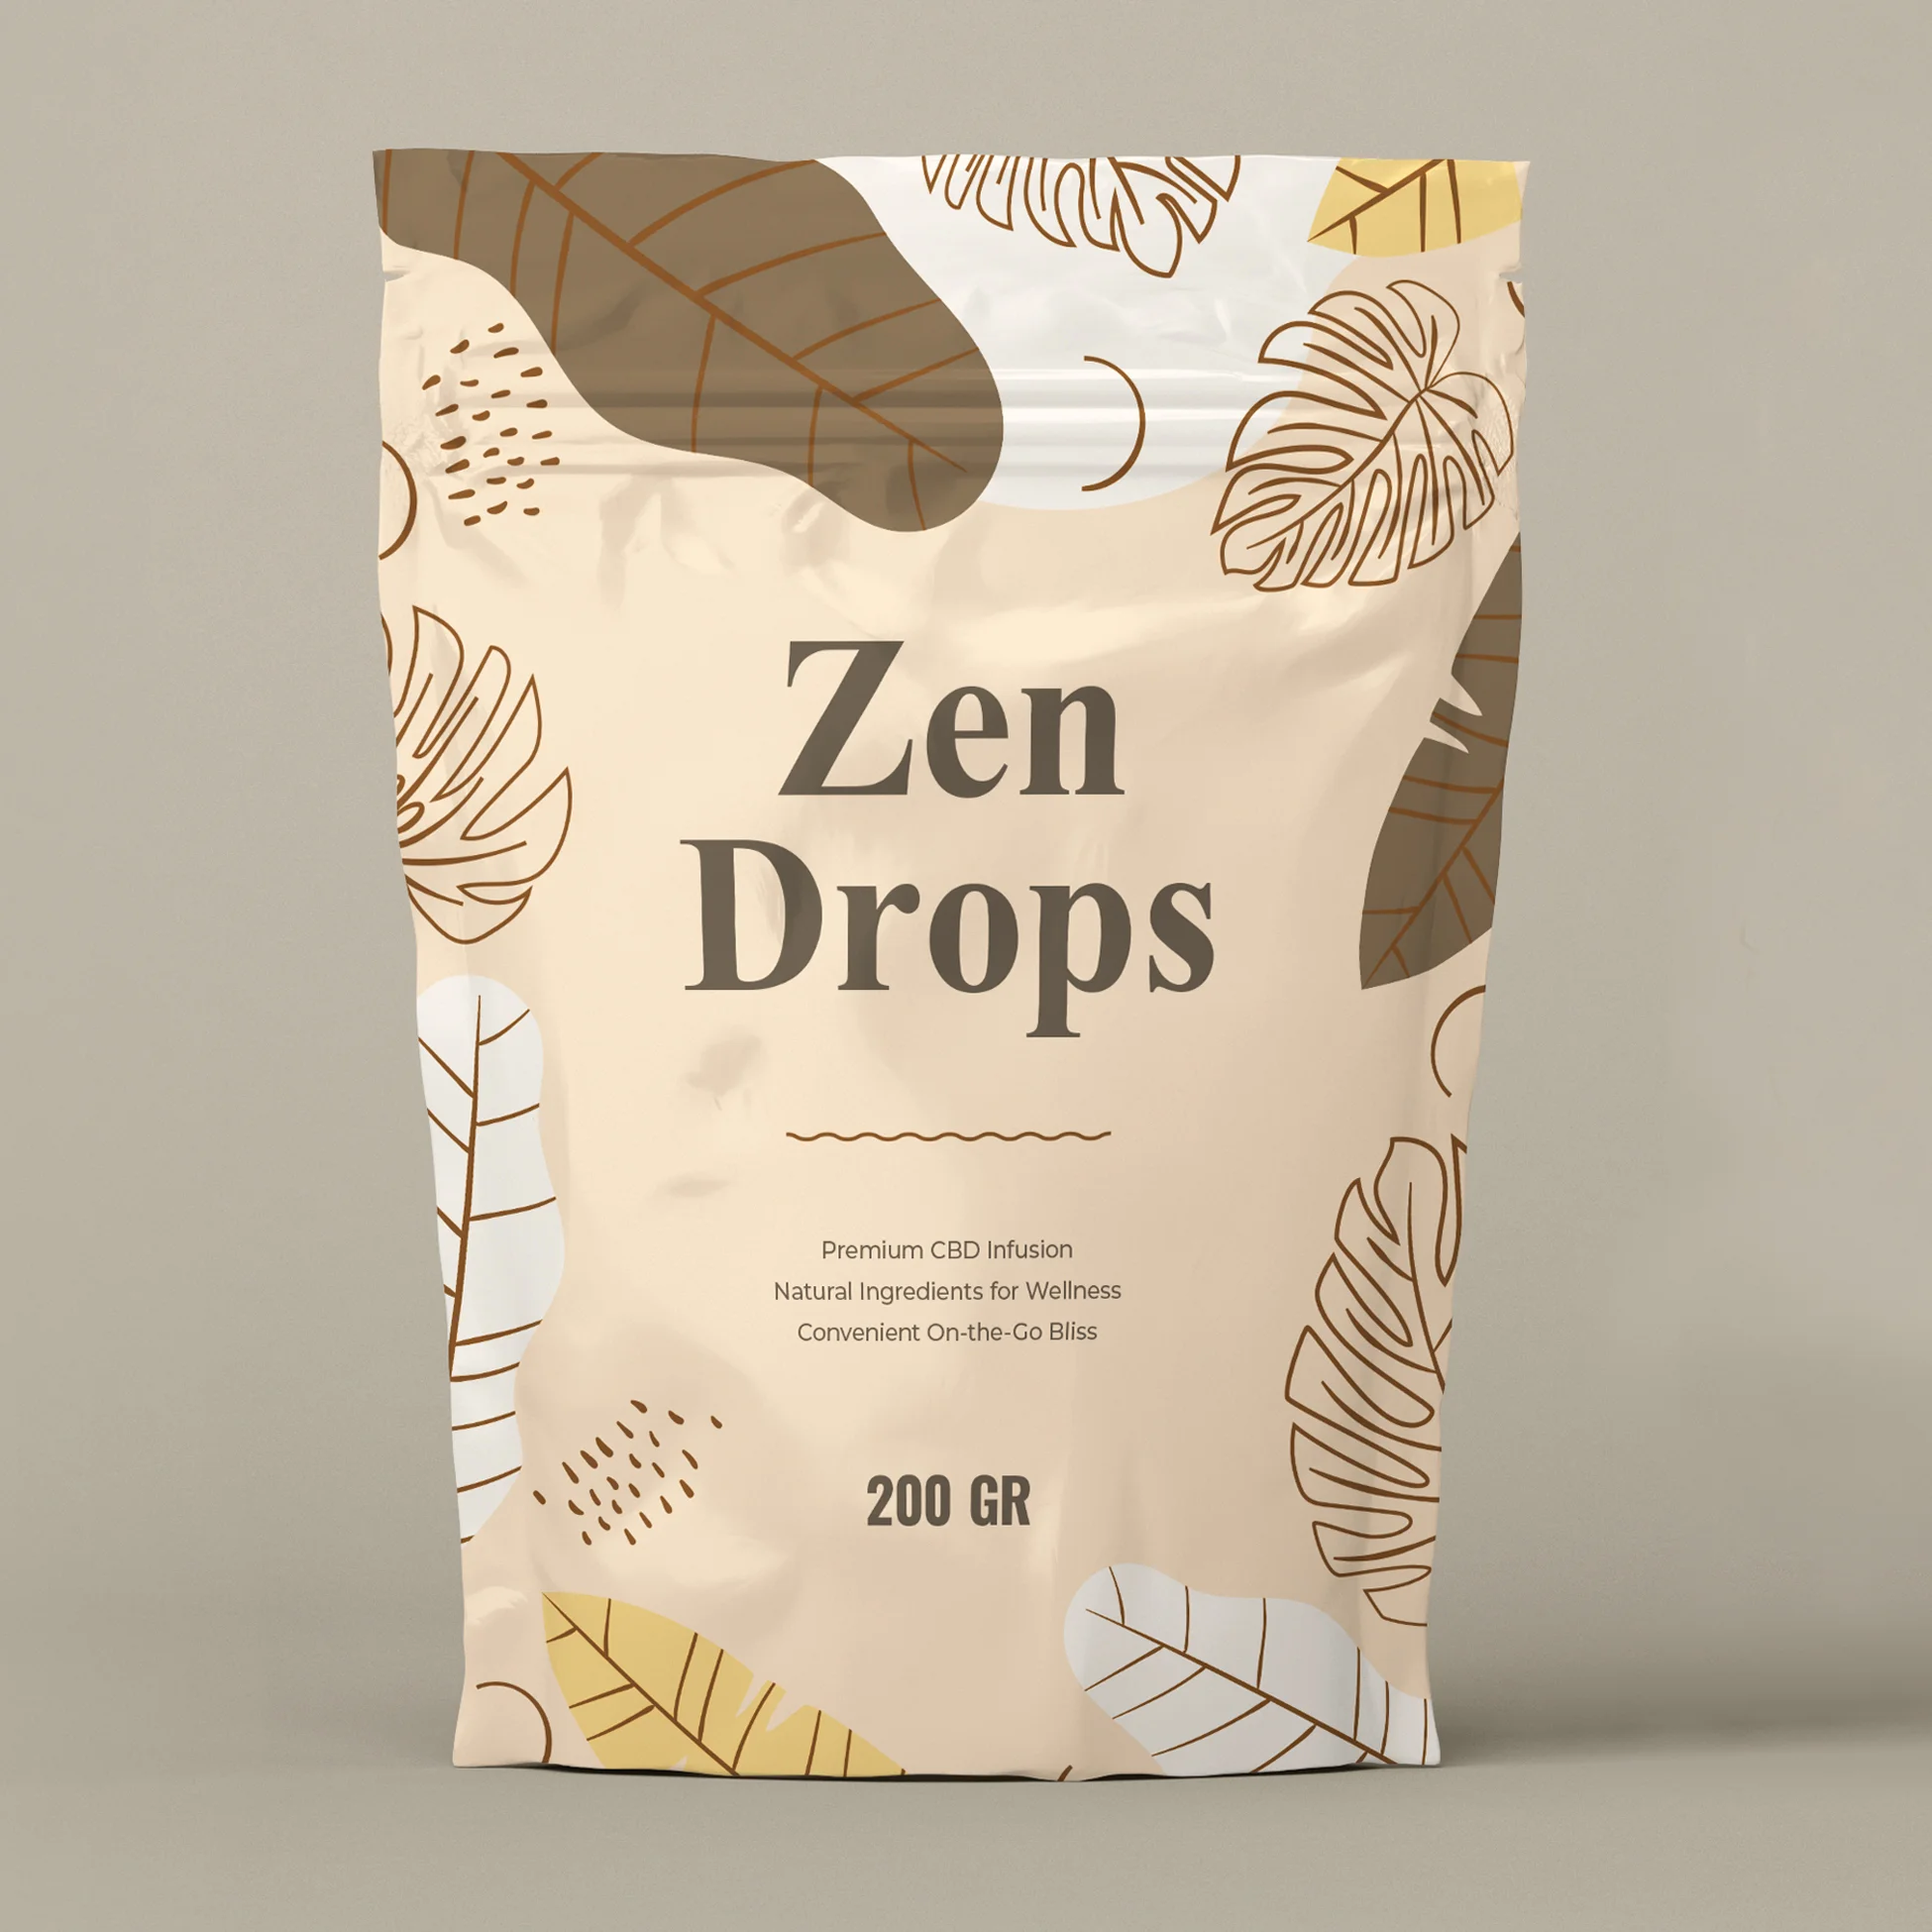 kraft mylar bags for our customer zen drops